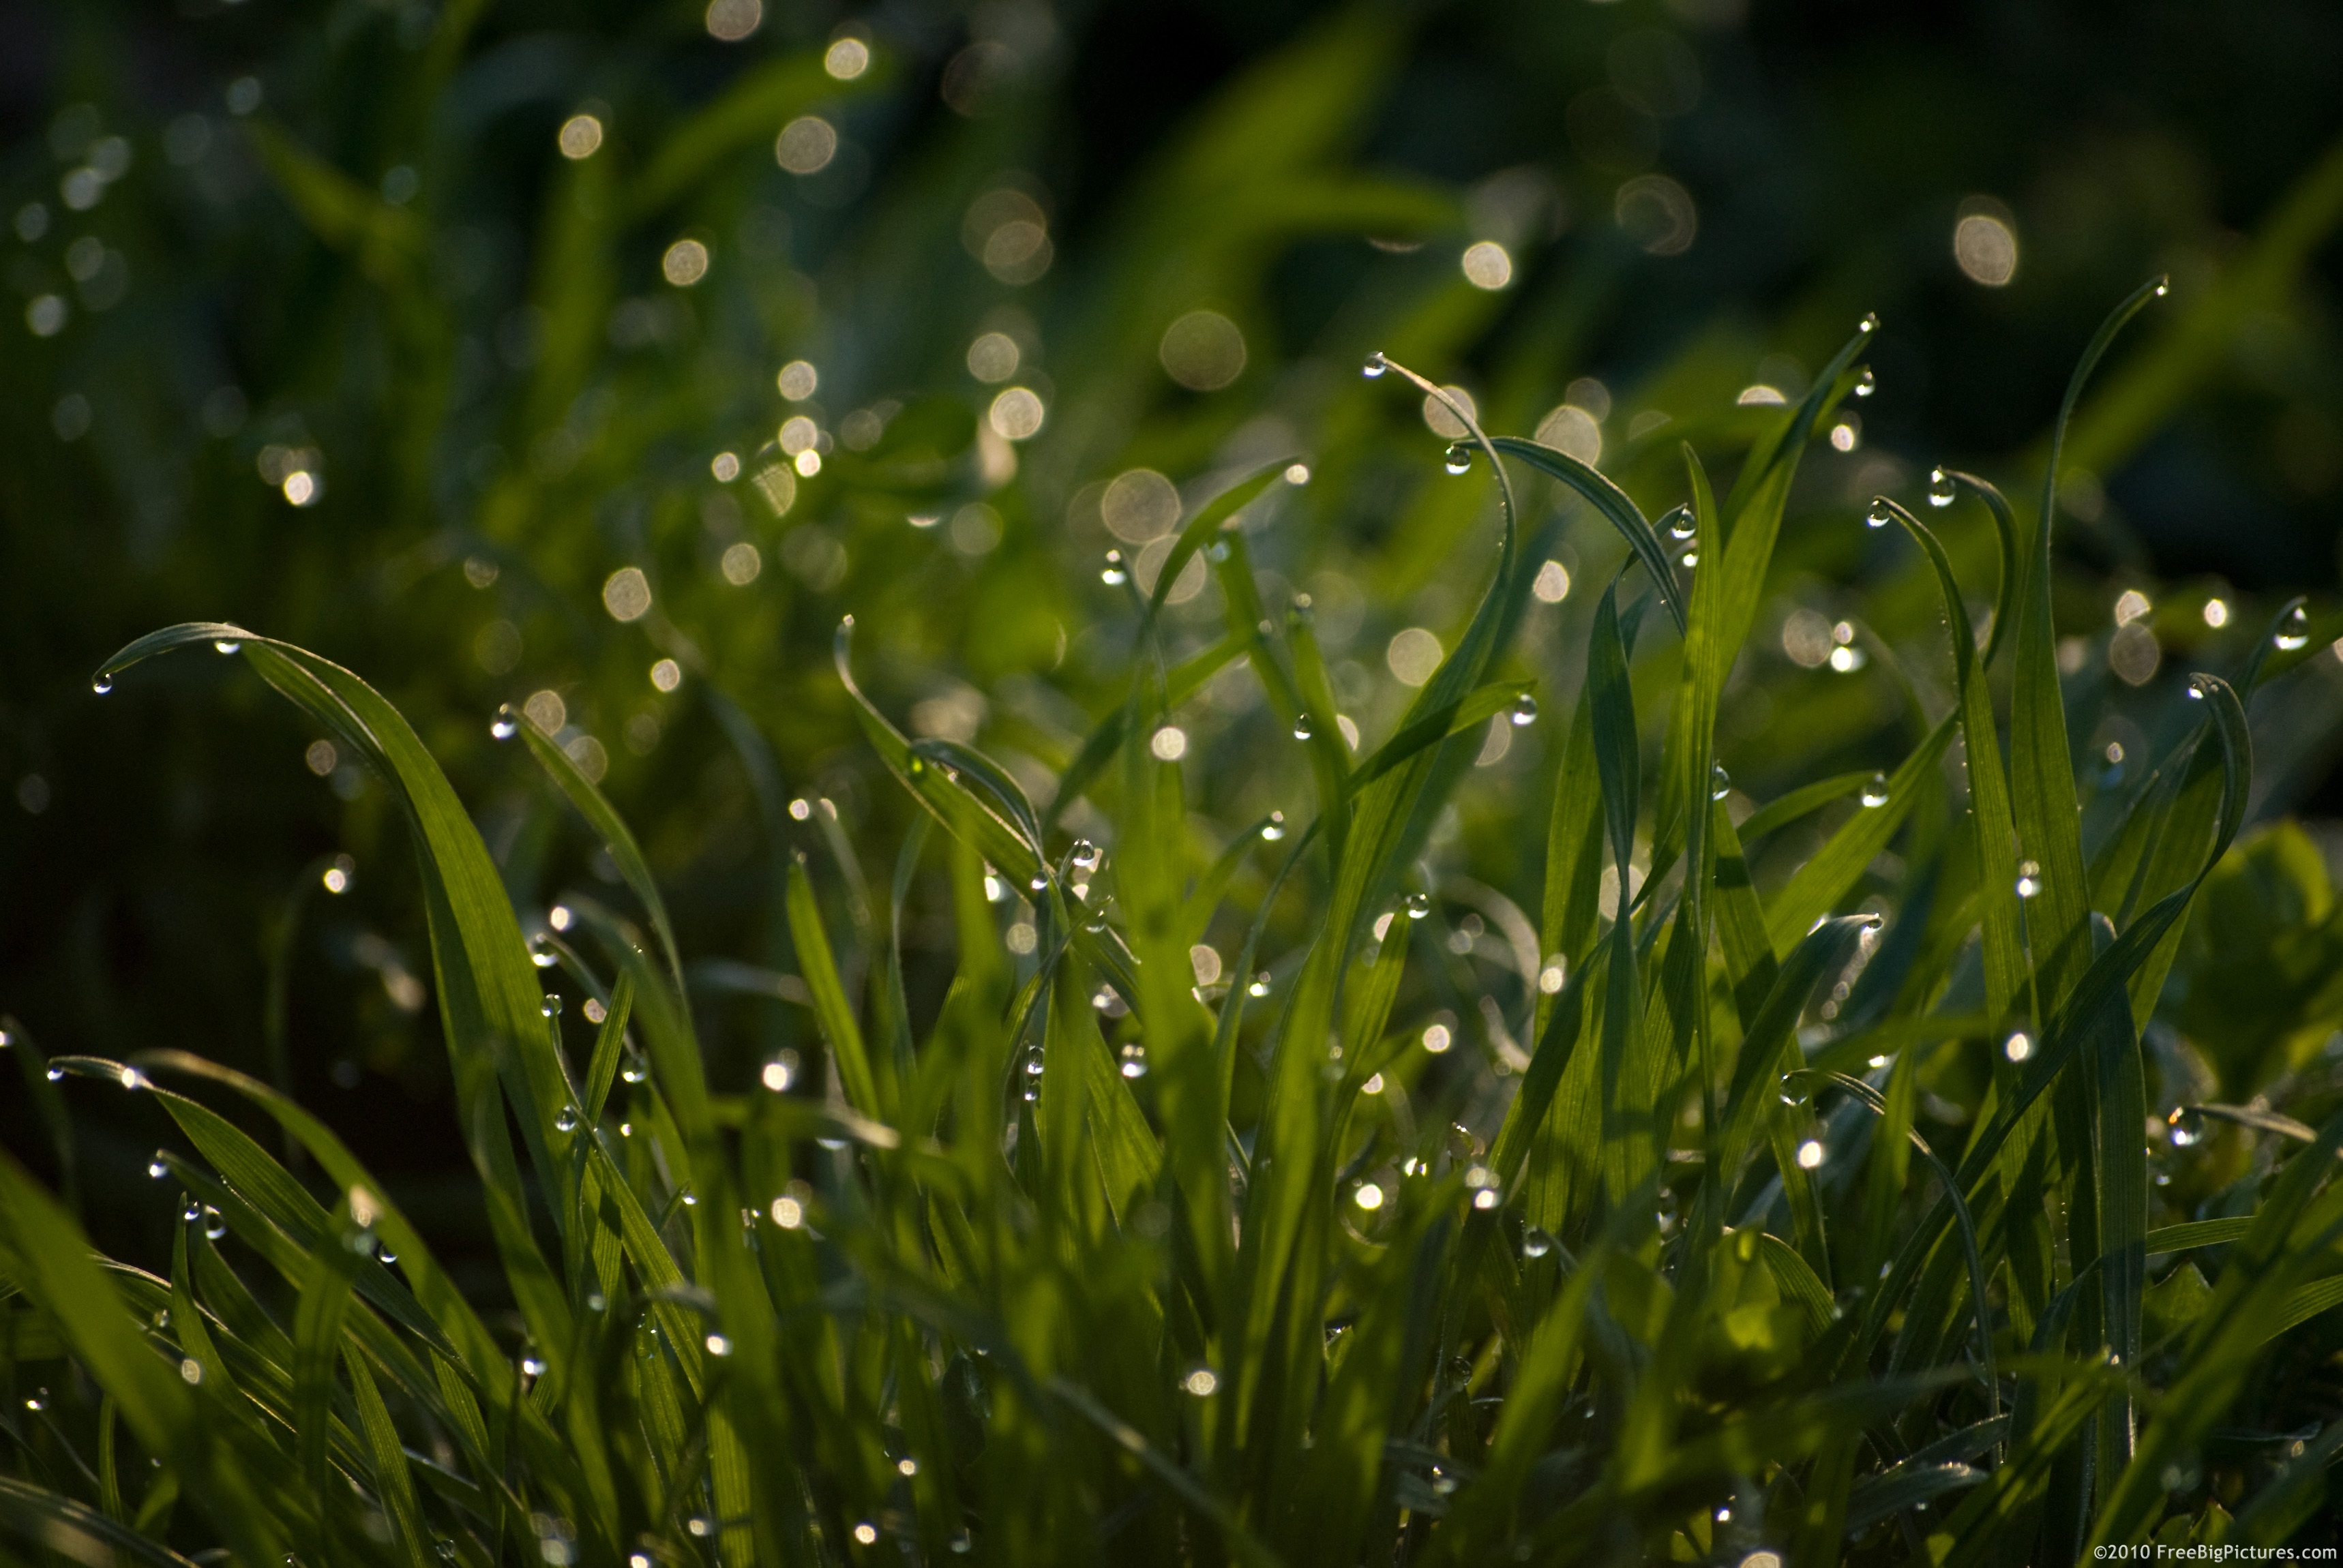 Dew on Grass – FREEBigPictures.com